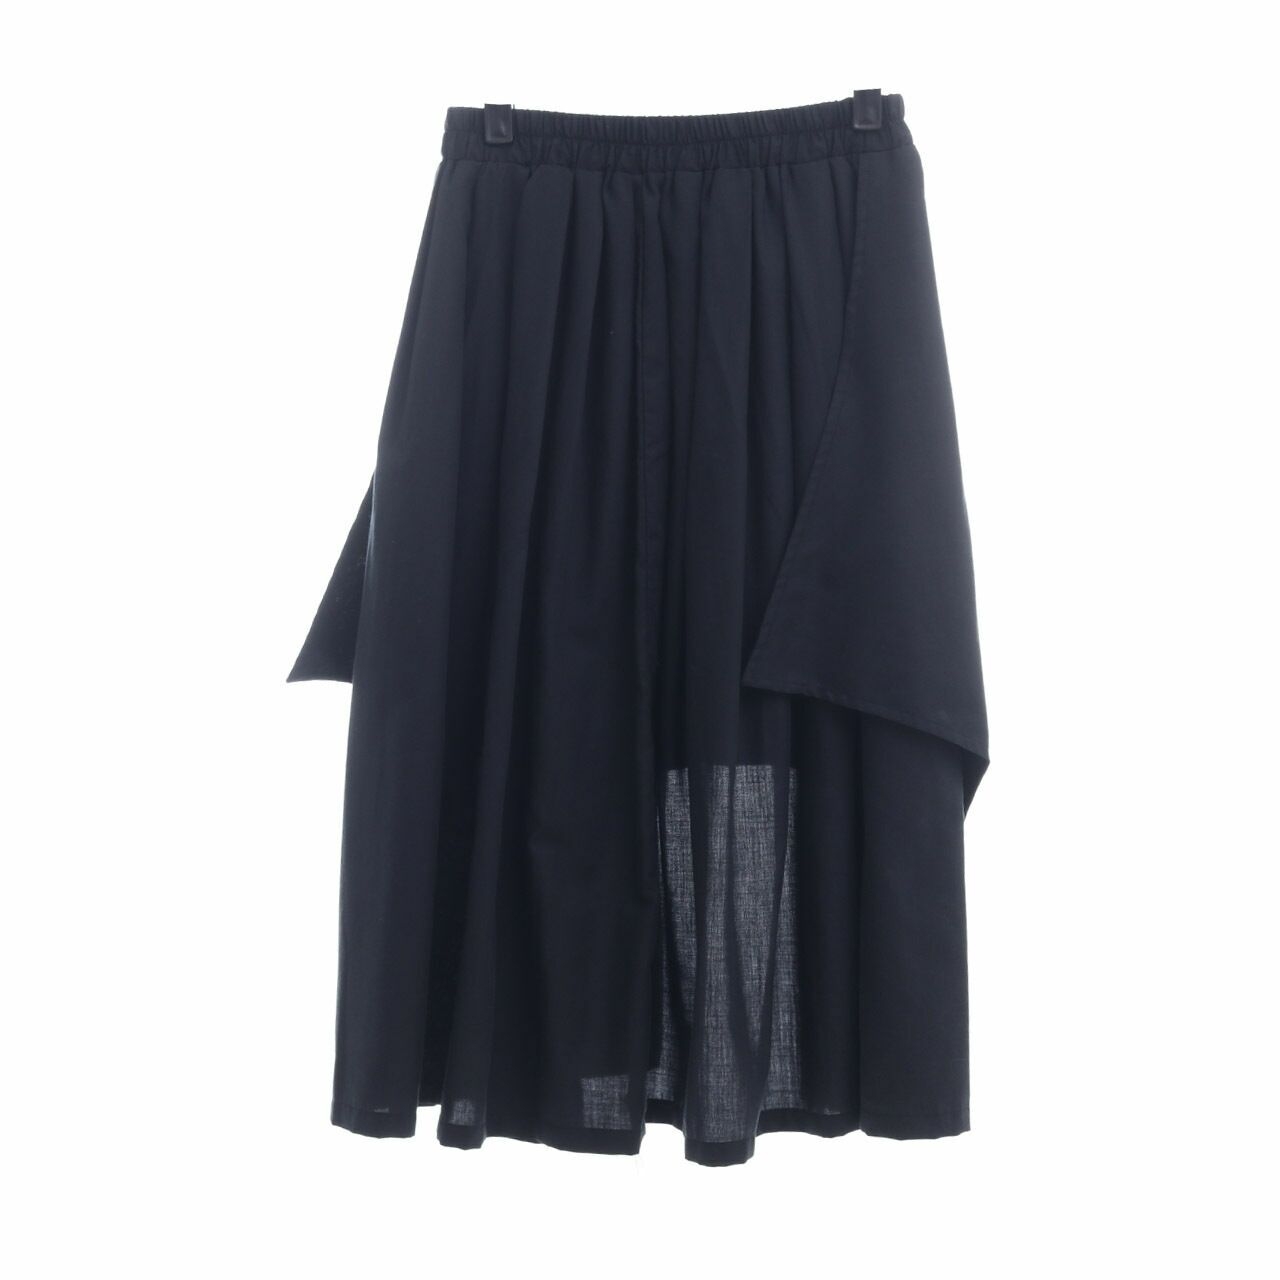 Namirah The Label Black Midi Skirt